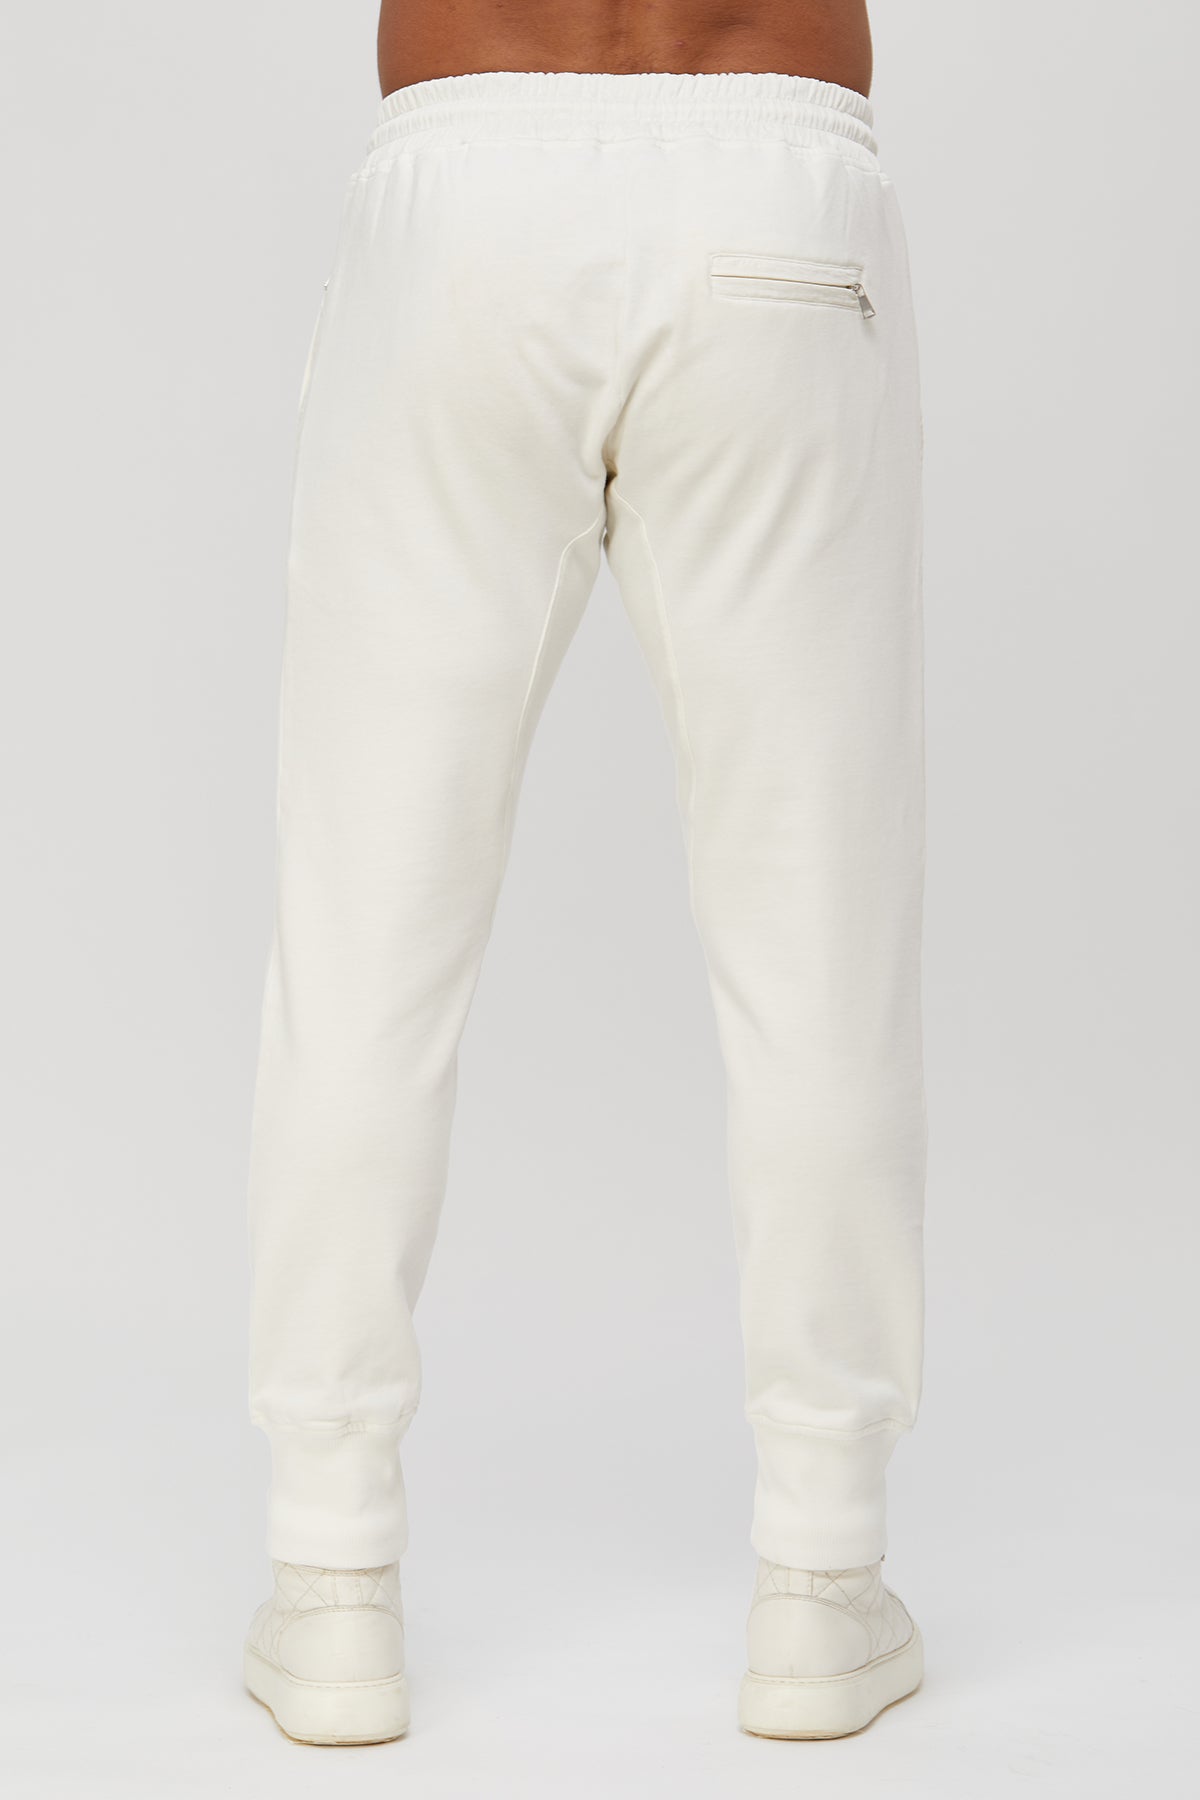 Men's sweatpants - active fleece joggers. 100 % great quality Turkish Pima cotton preshrunk. Zippered pockets. Sports. Gym ,Yoga, Fitness.